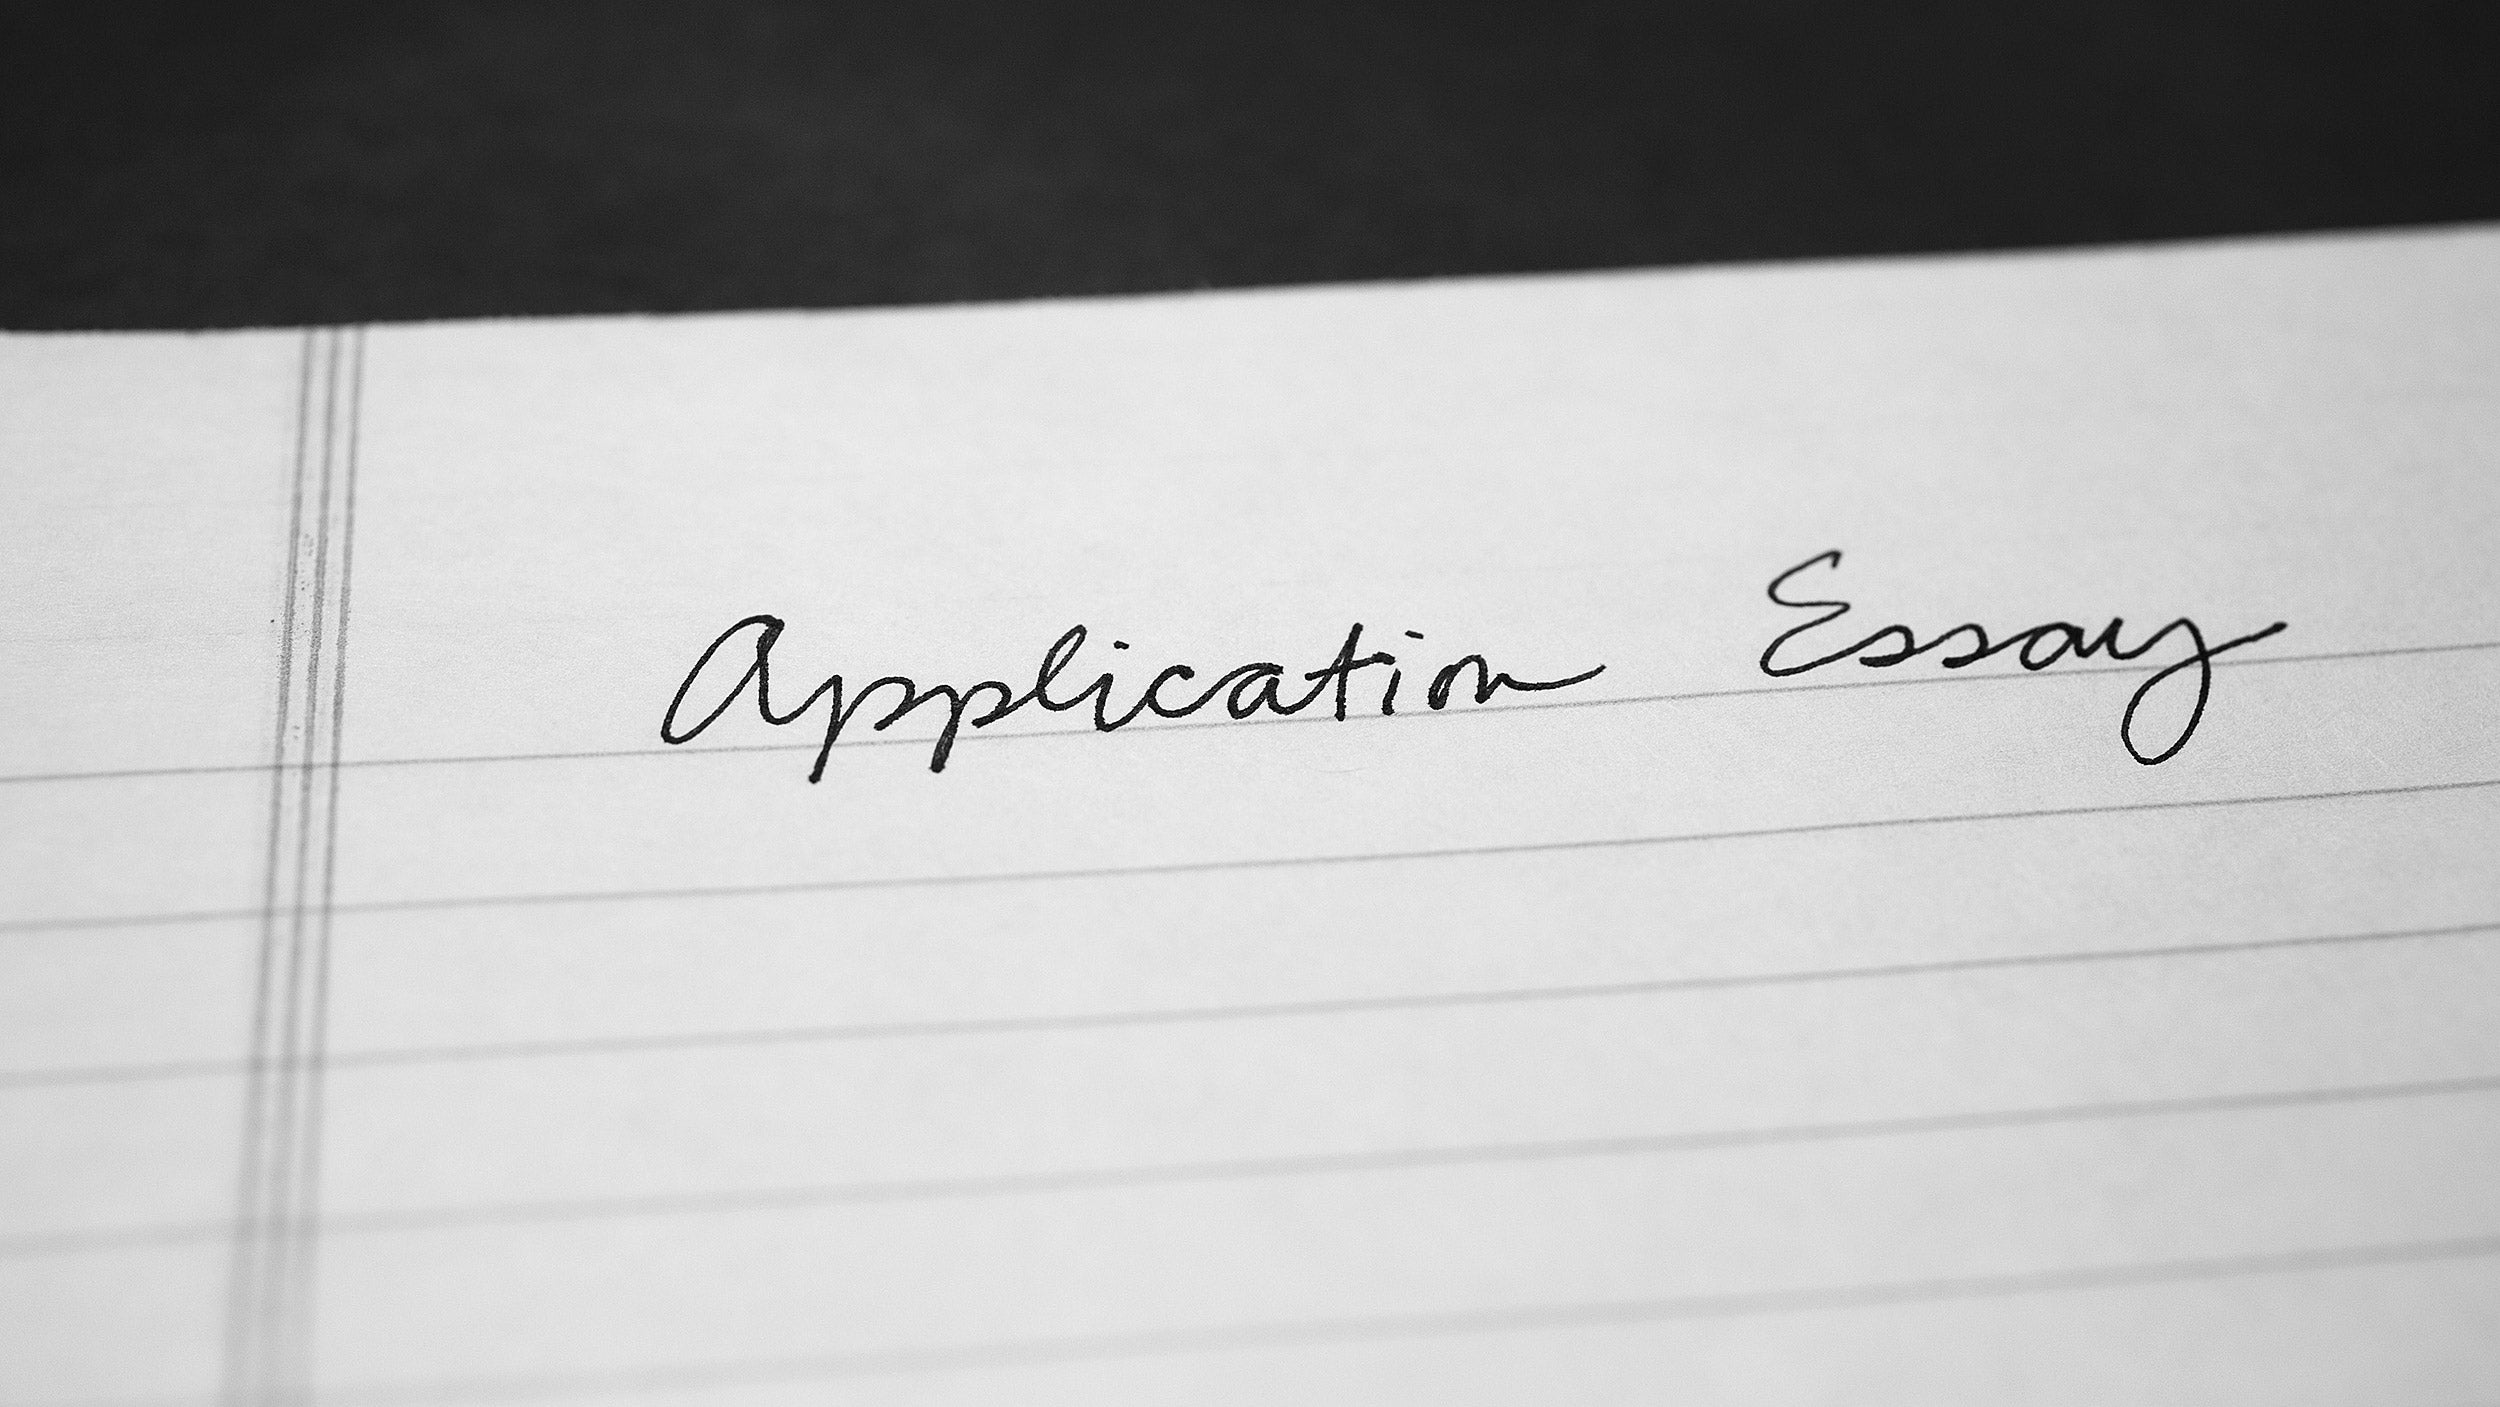 Admission essay editing service harvard